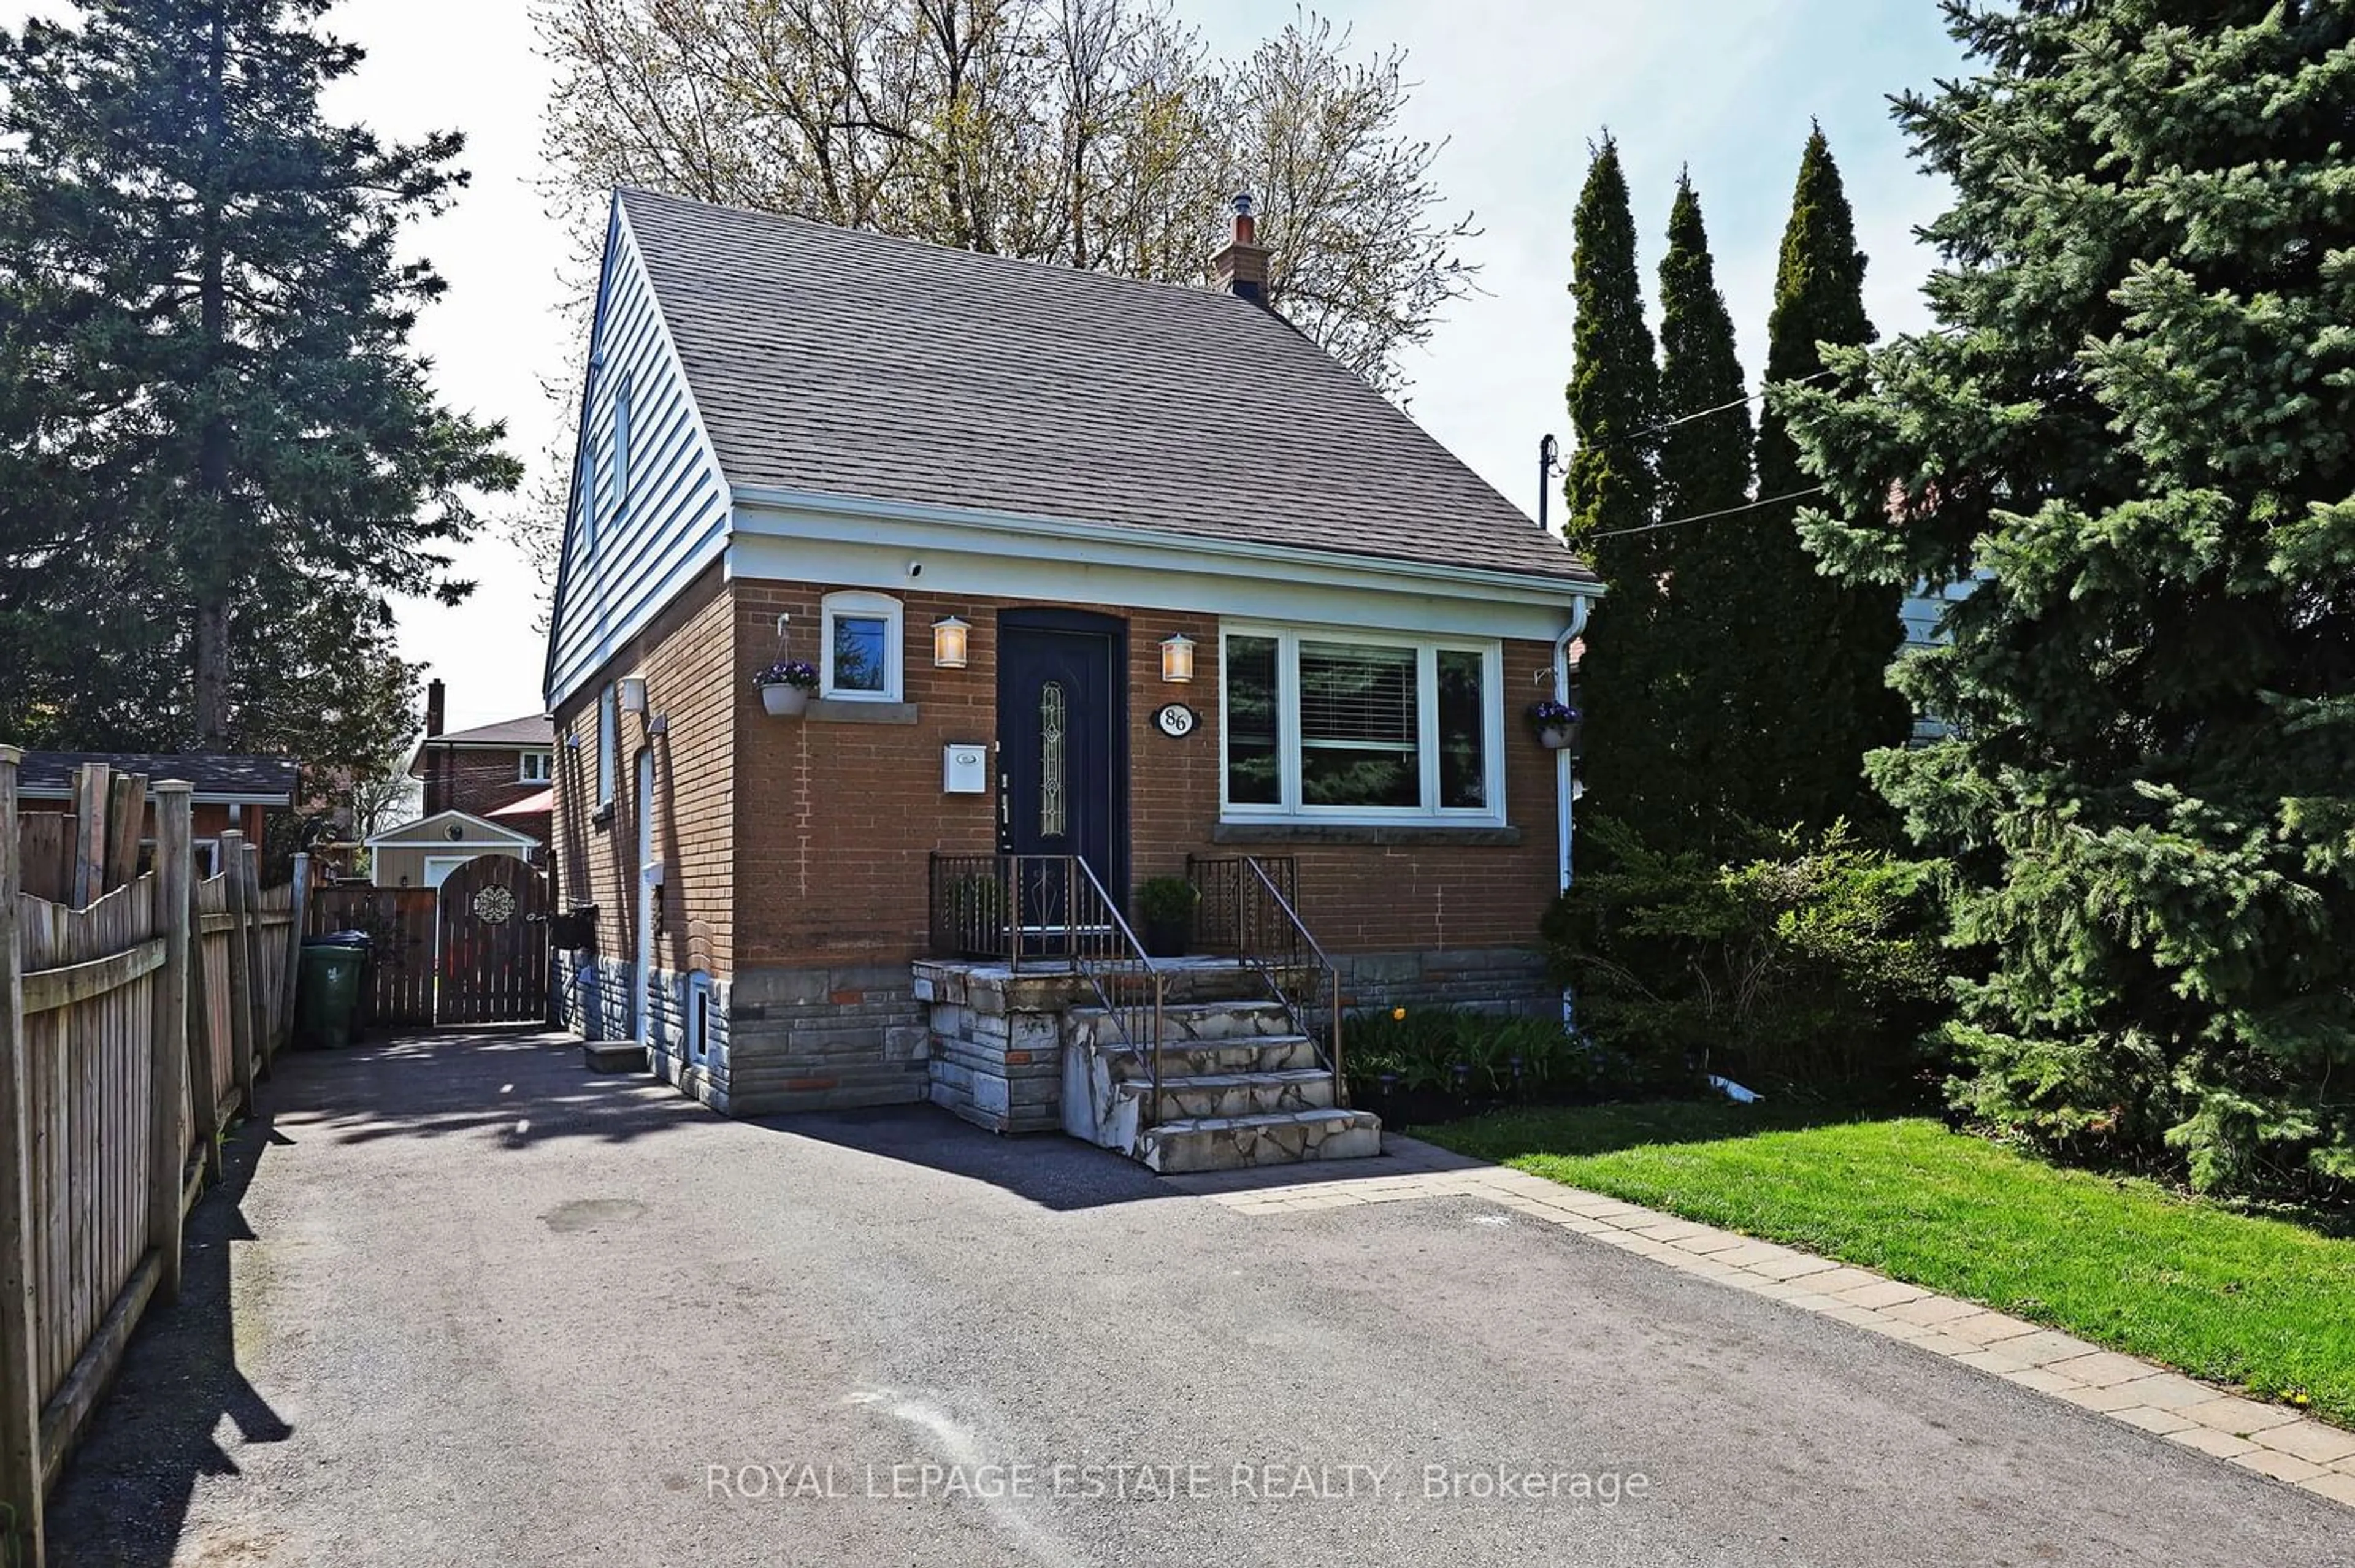 Home with brick exterior material for 86 Sharpe St, Toronto Ontario M1N 3V1